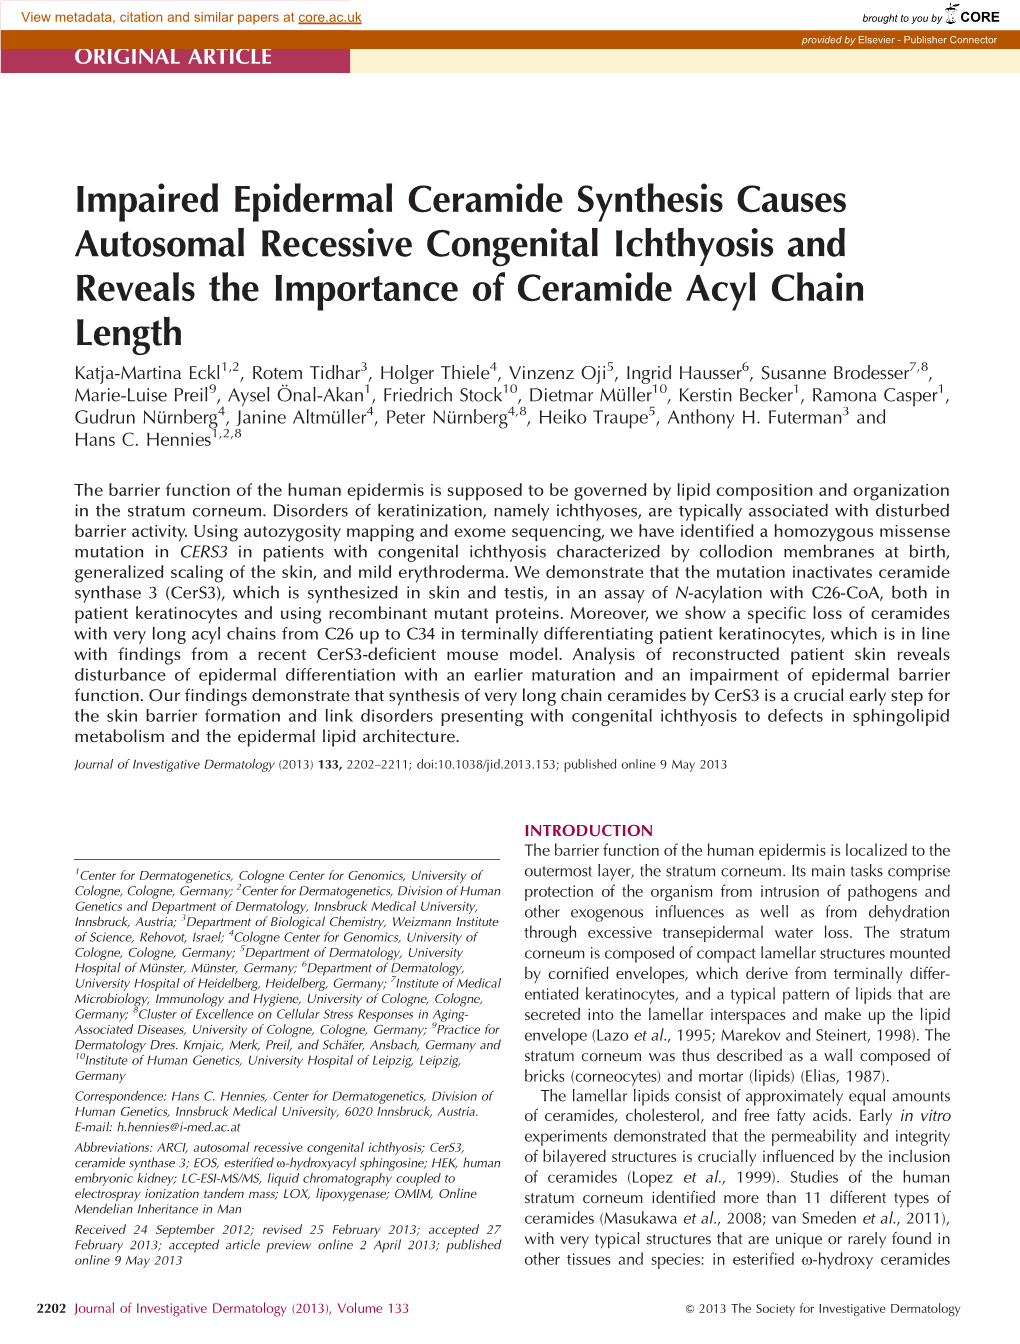 Impaired Epidermal Ceramide Synthesis Causes Autosomal